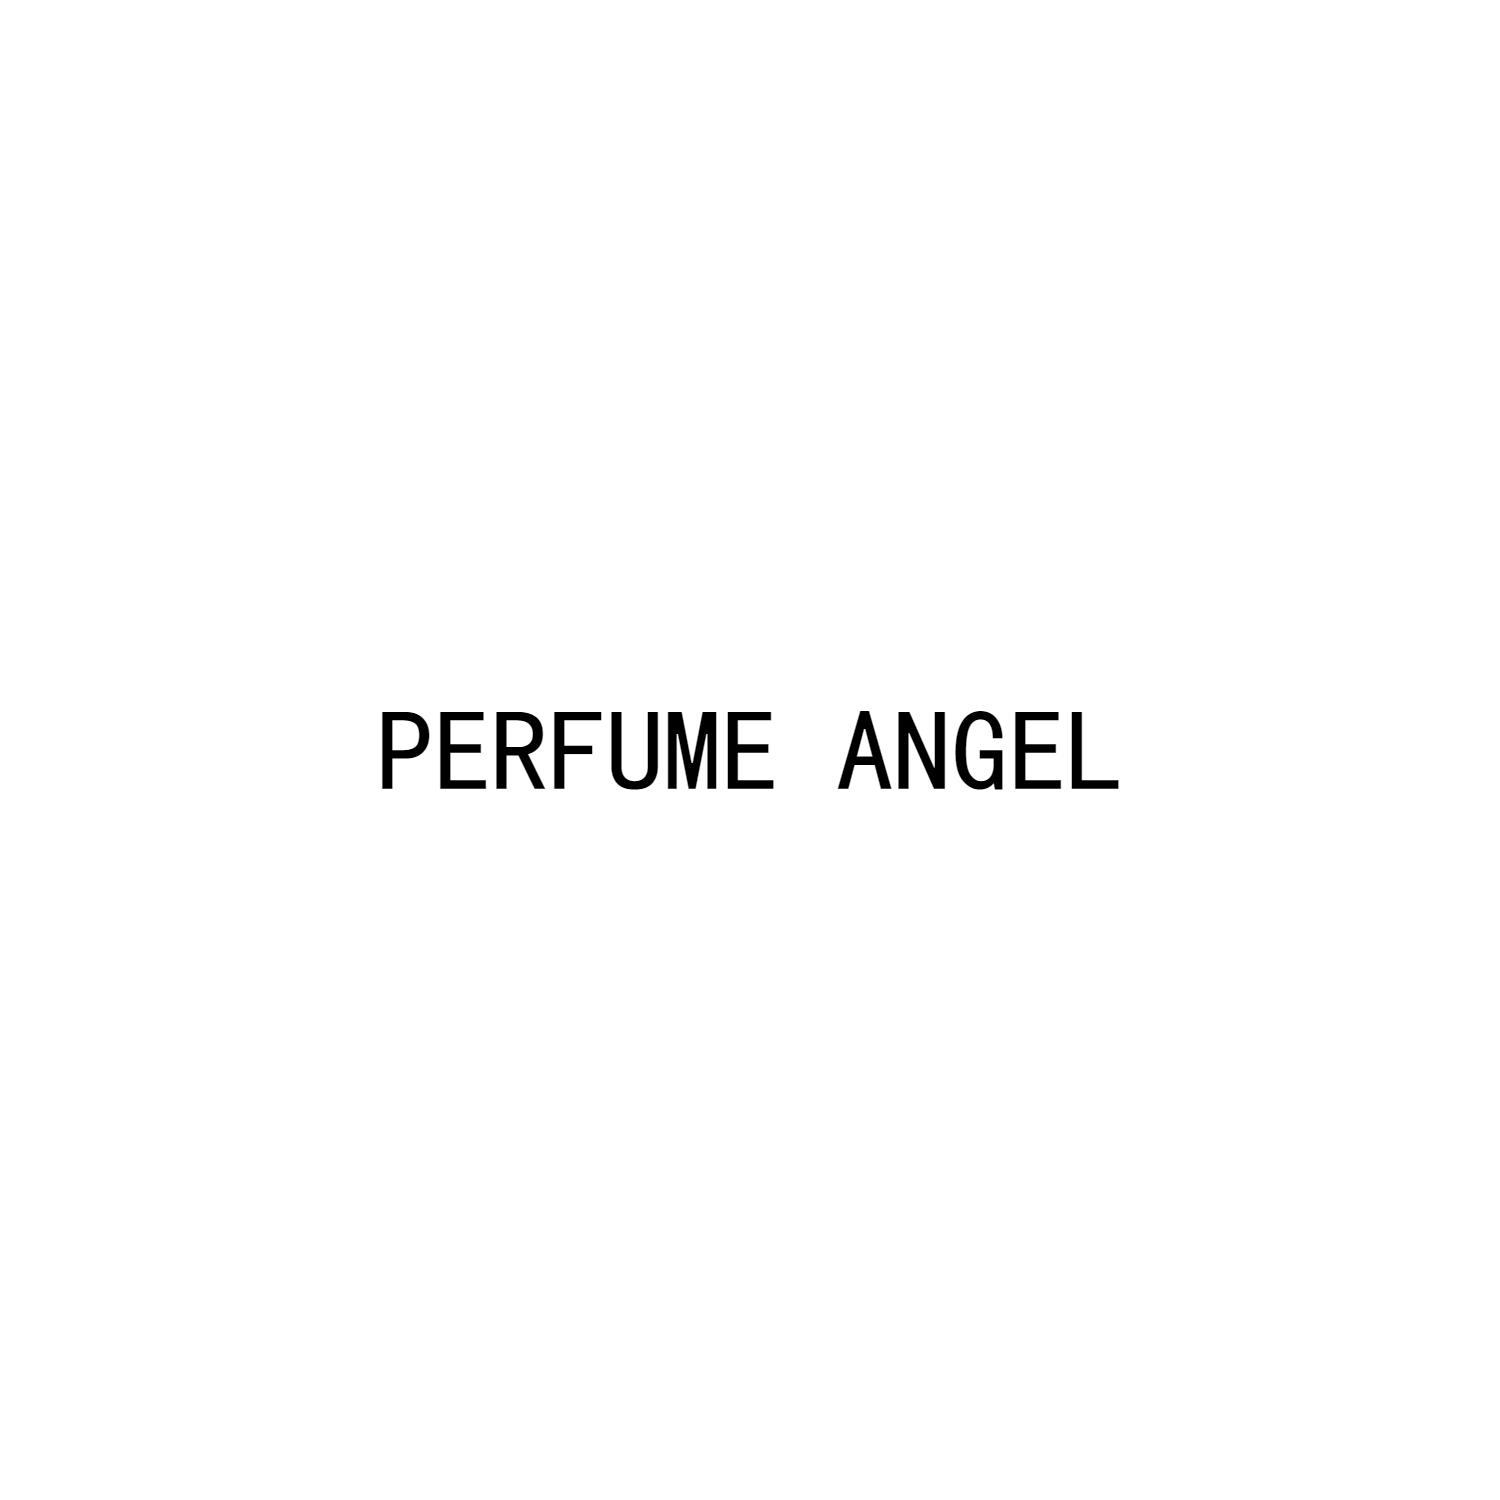 PERFUME ANGEL商标转让